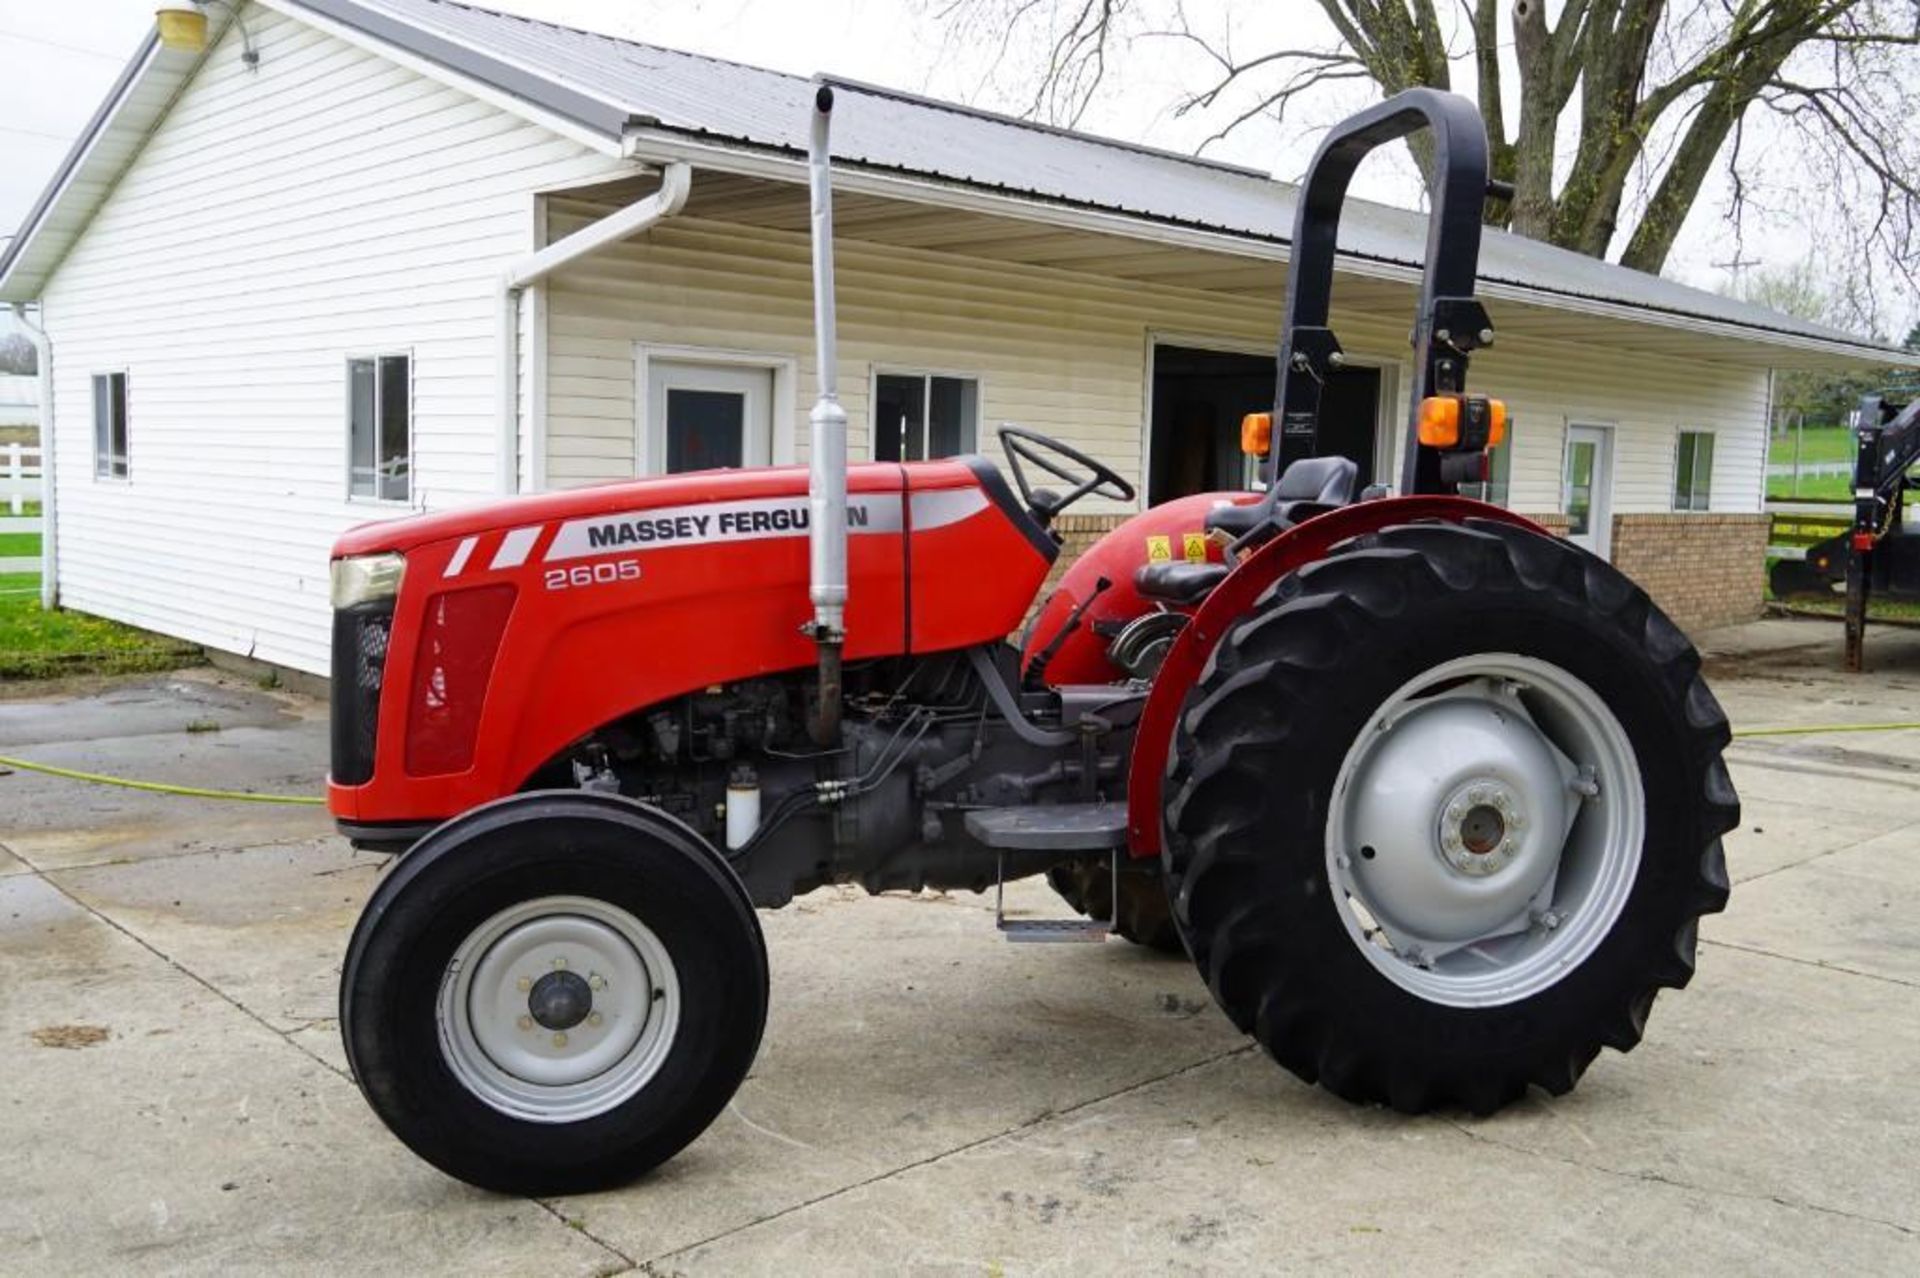 Massey Ferguson 2605 Tractor - Image 2 of 35